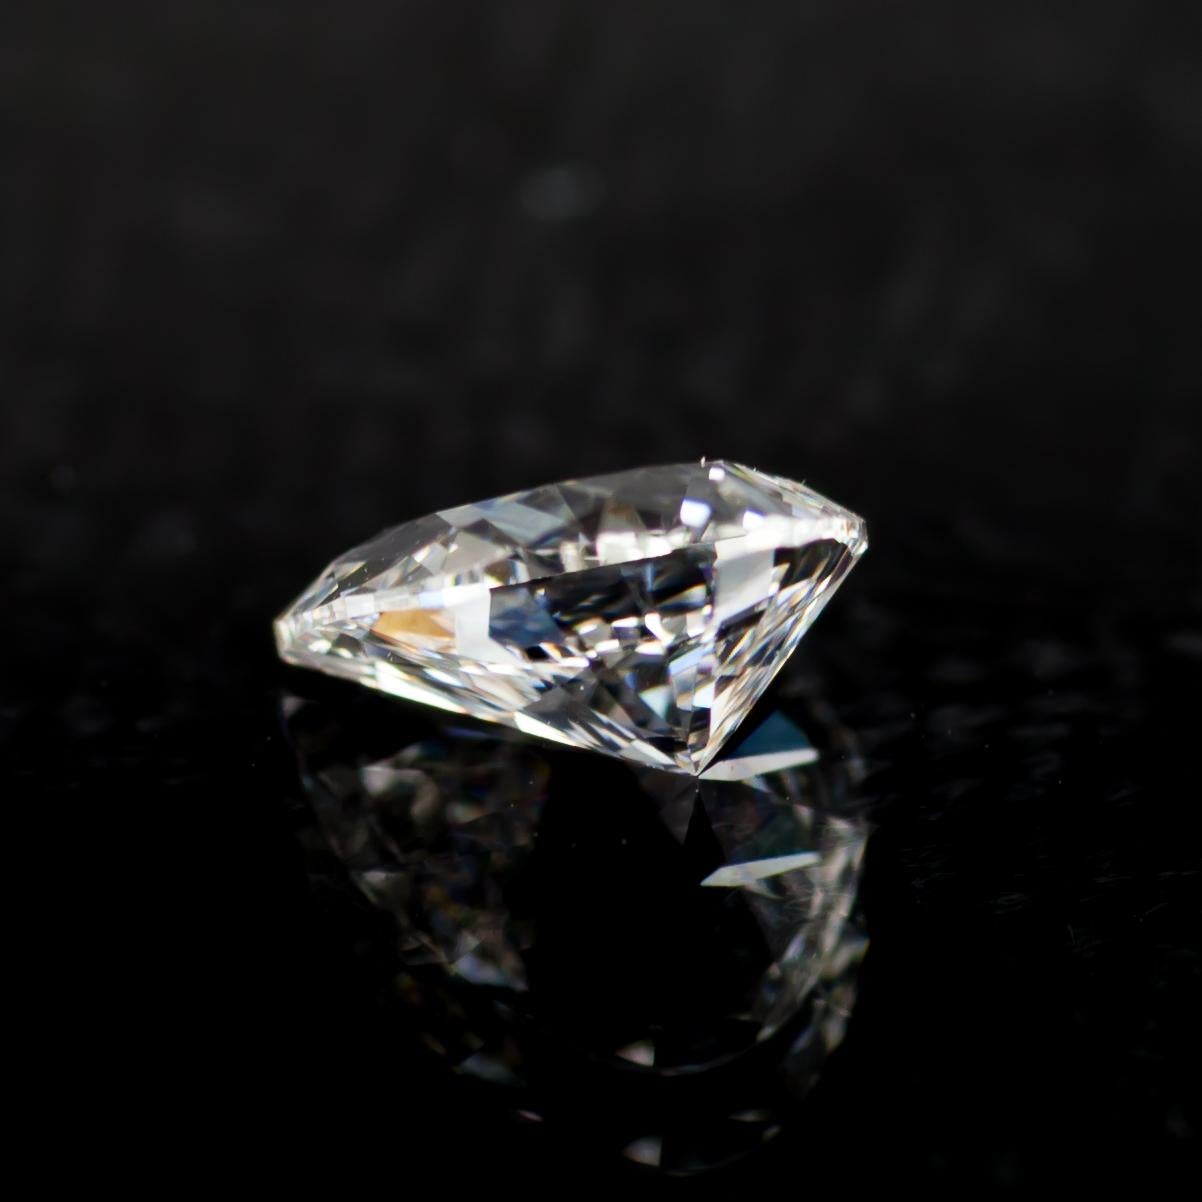 diamond shape measurements